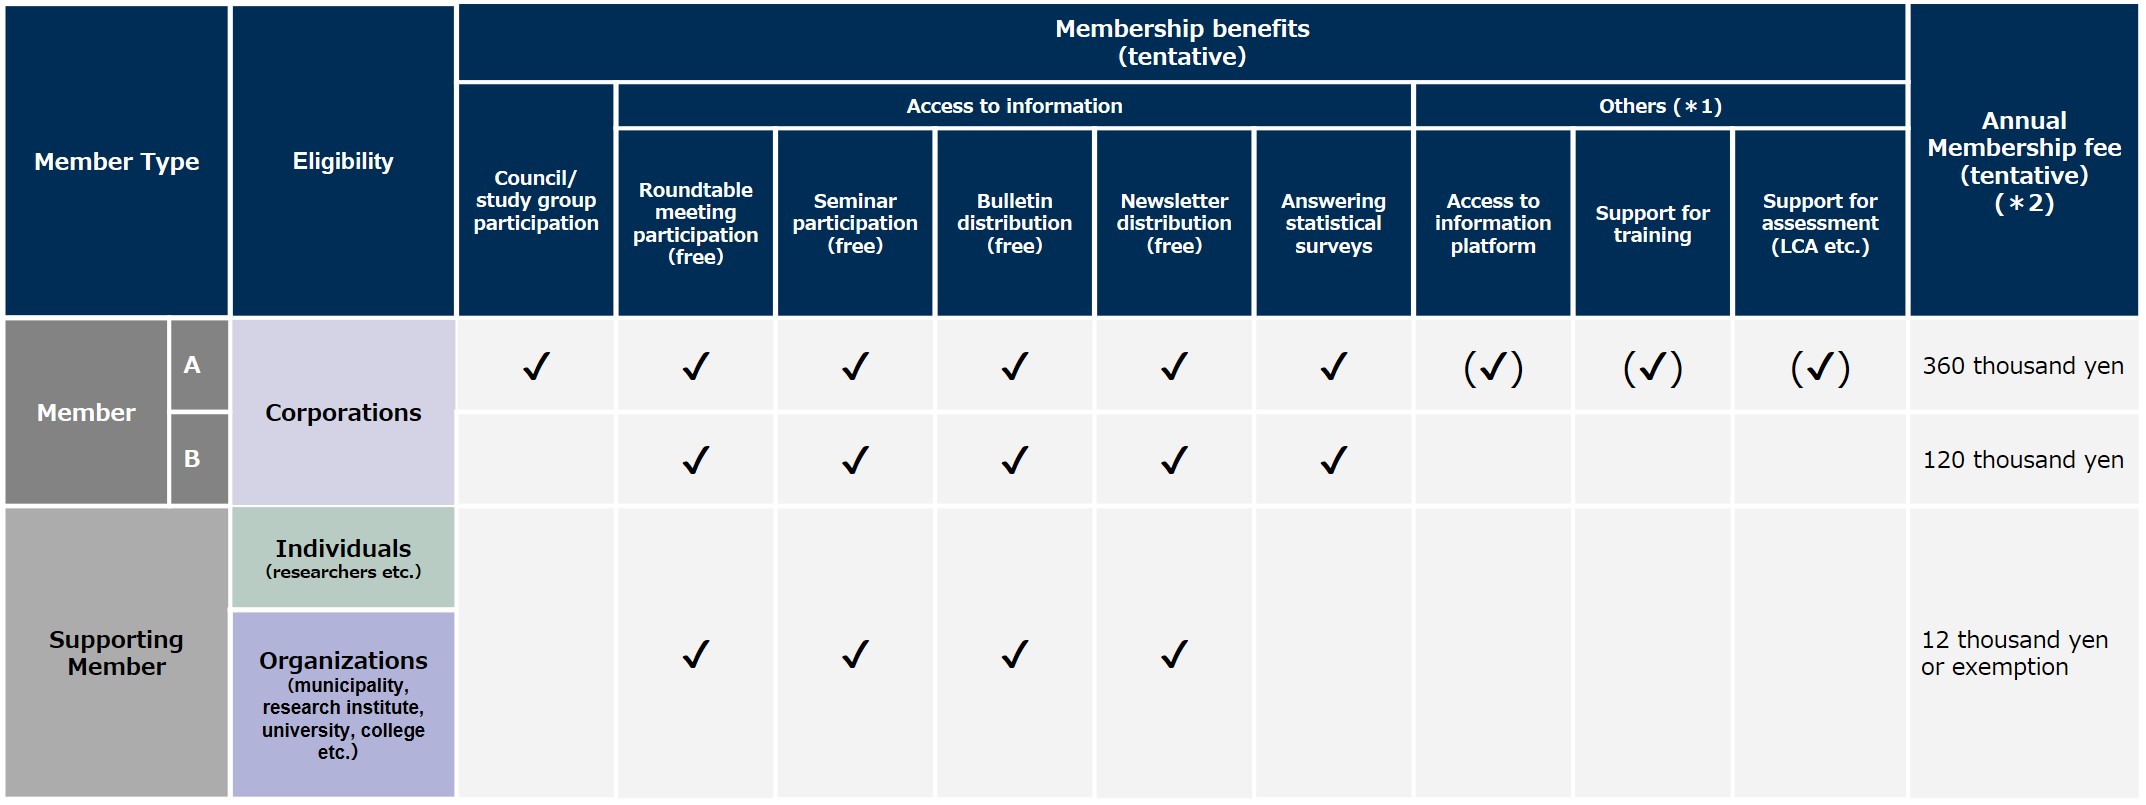 Membership Benefits / Annual Membership Fee